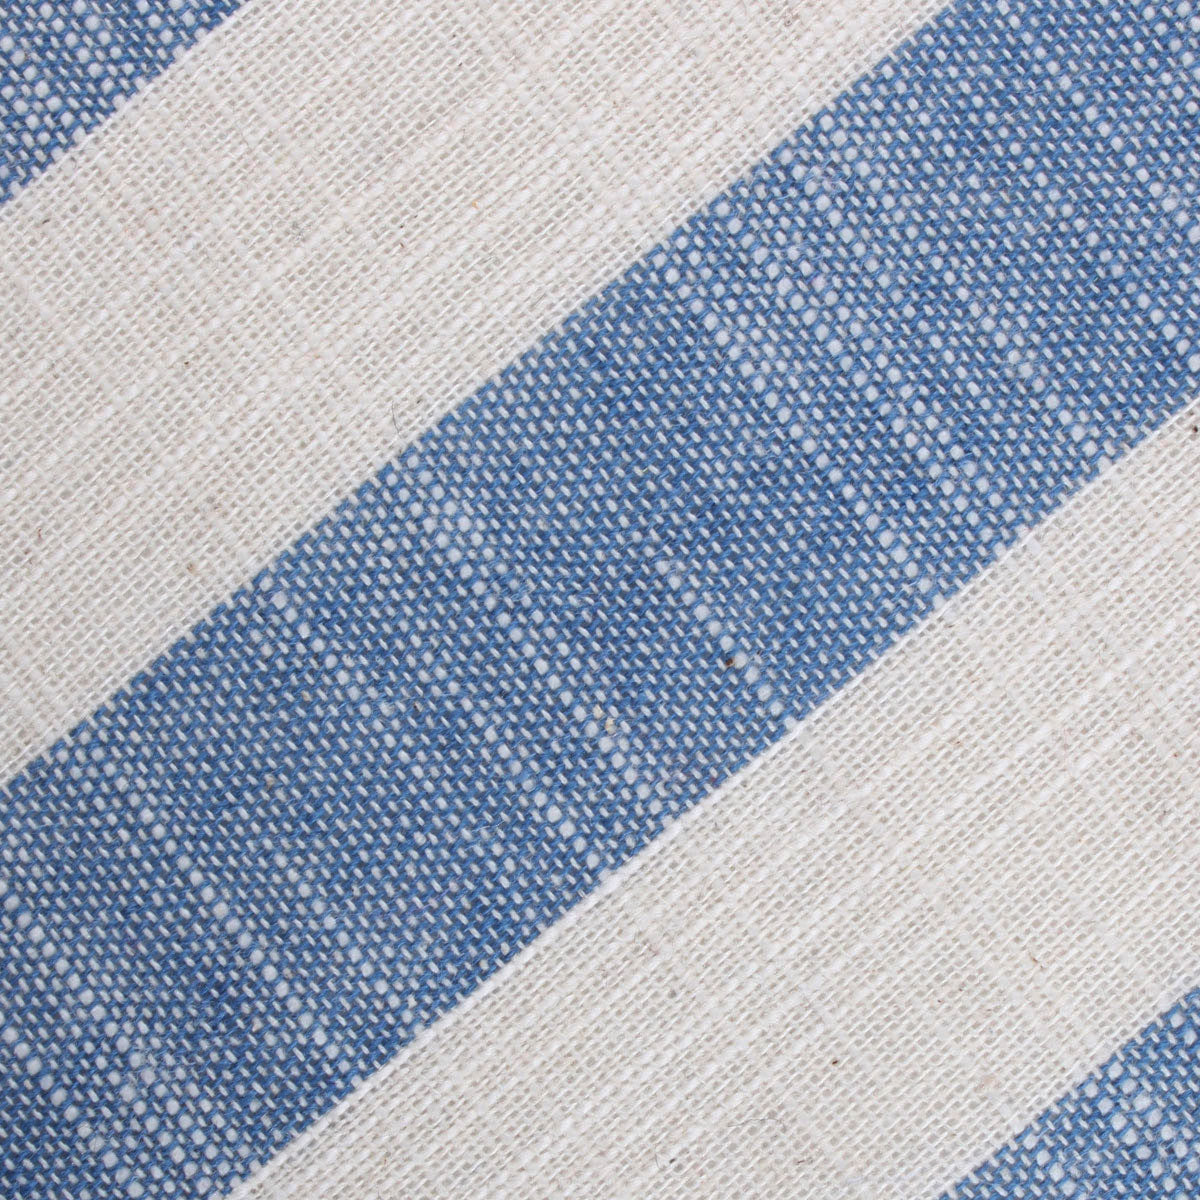 Kara Ada Light Blue Striped Linen Fabric Skinny Tie